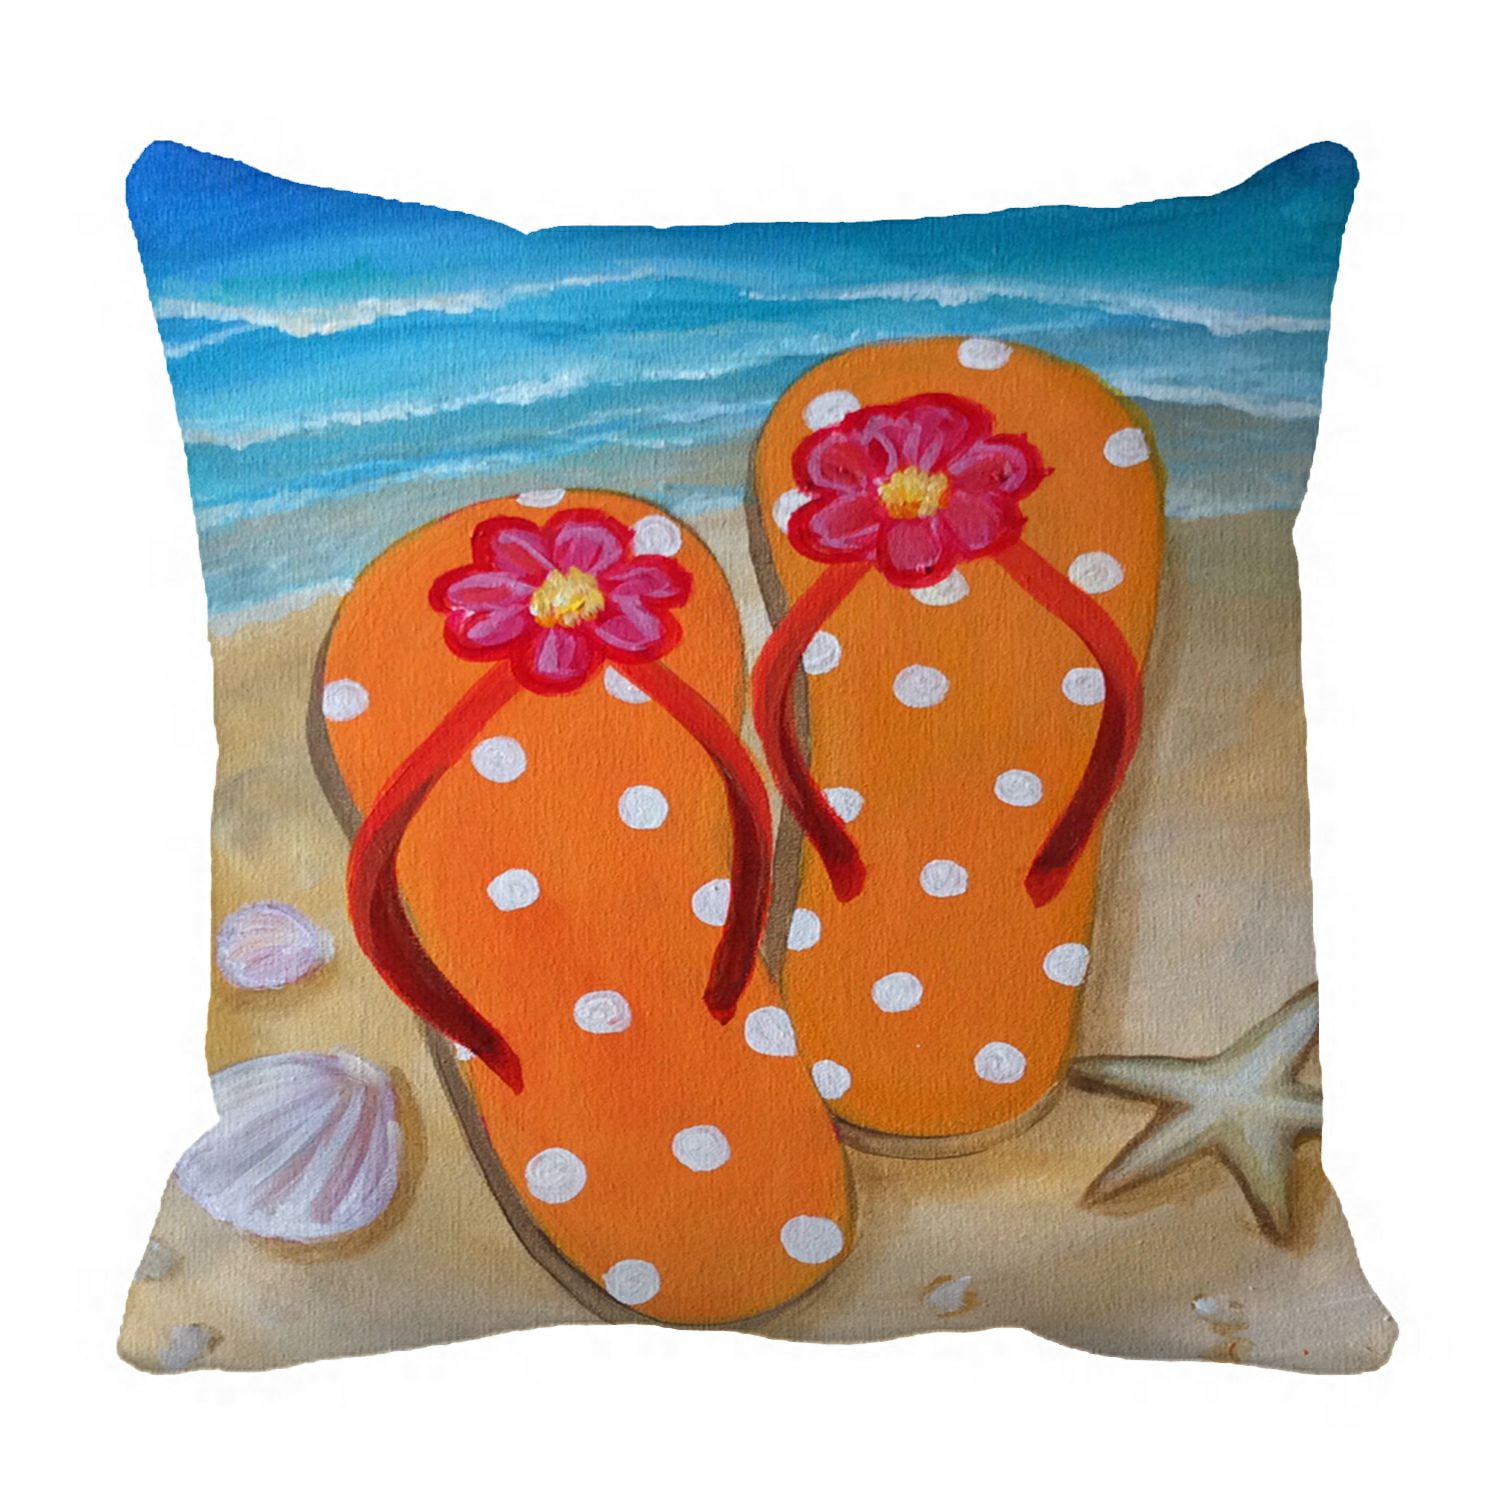 ZKGK Beach Flip Flops Pillowcase Home Decor Pillow Cover Case Cushion ...